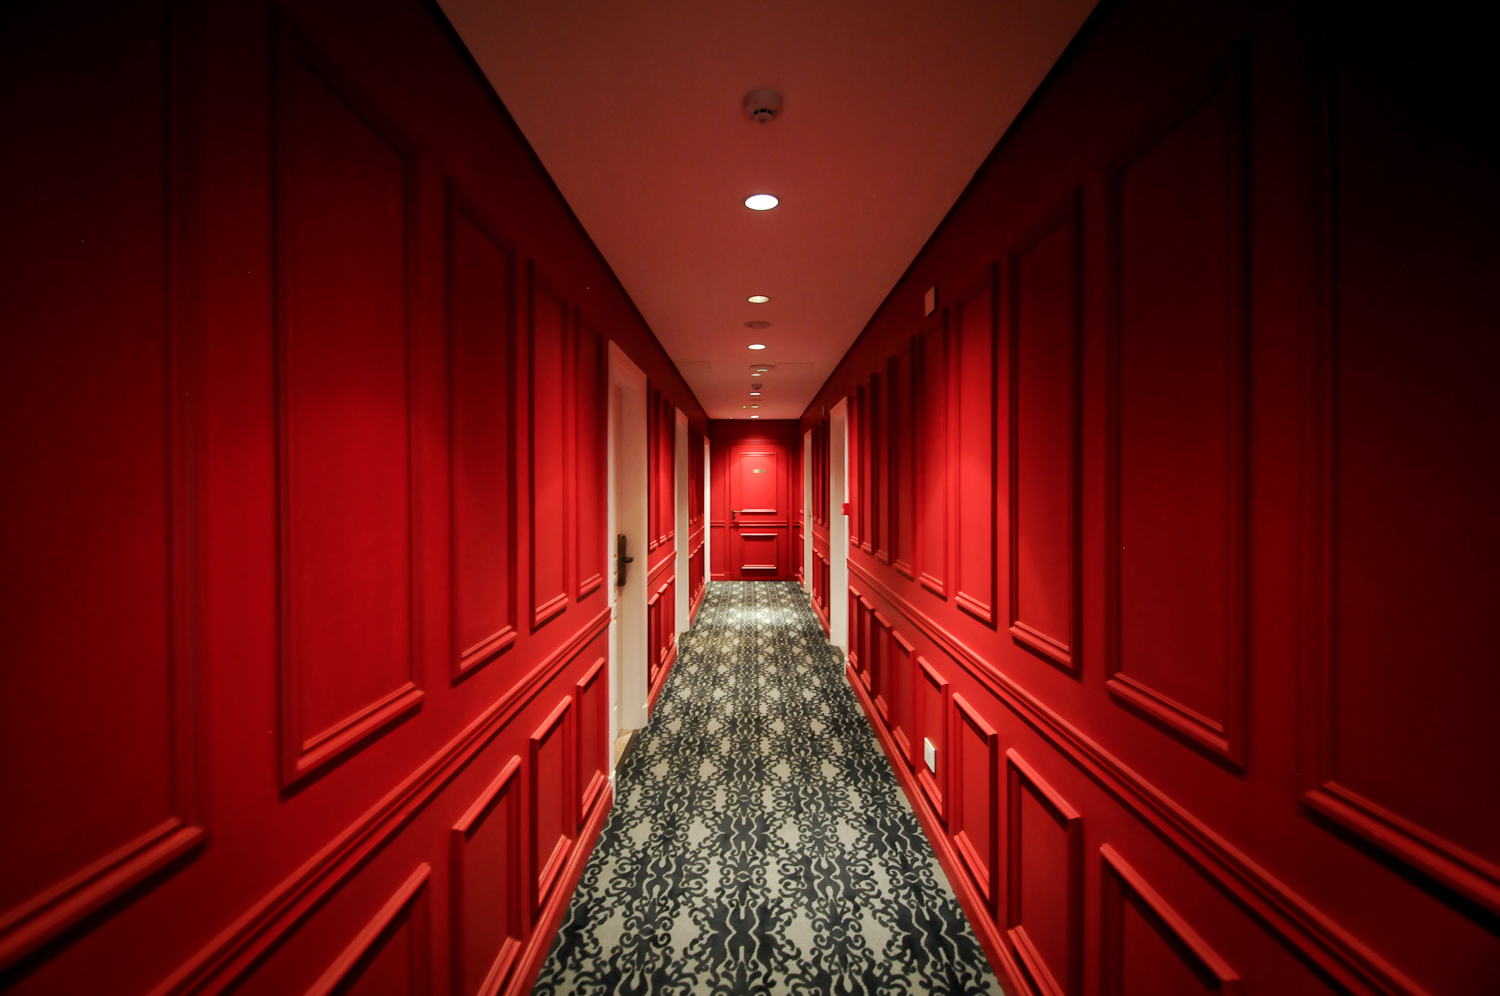 Hoteles del séptimo arte, pasillo rojo de hotel clásico